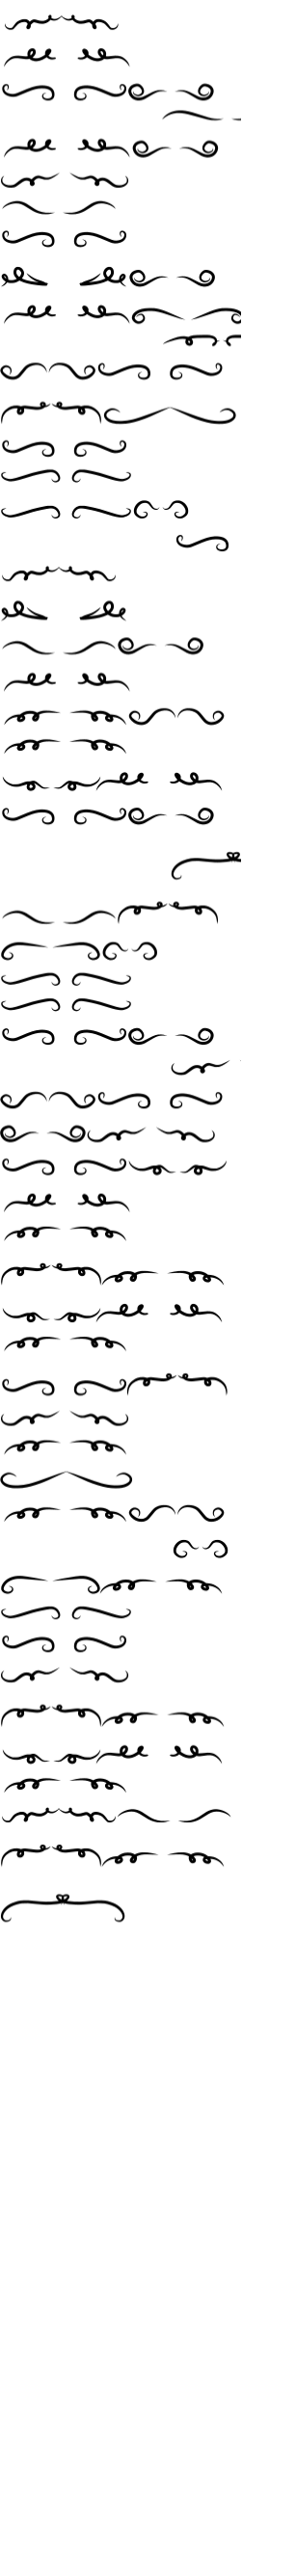 monogram-divider